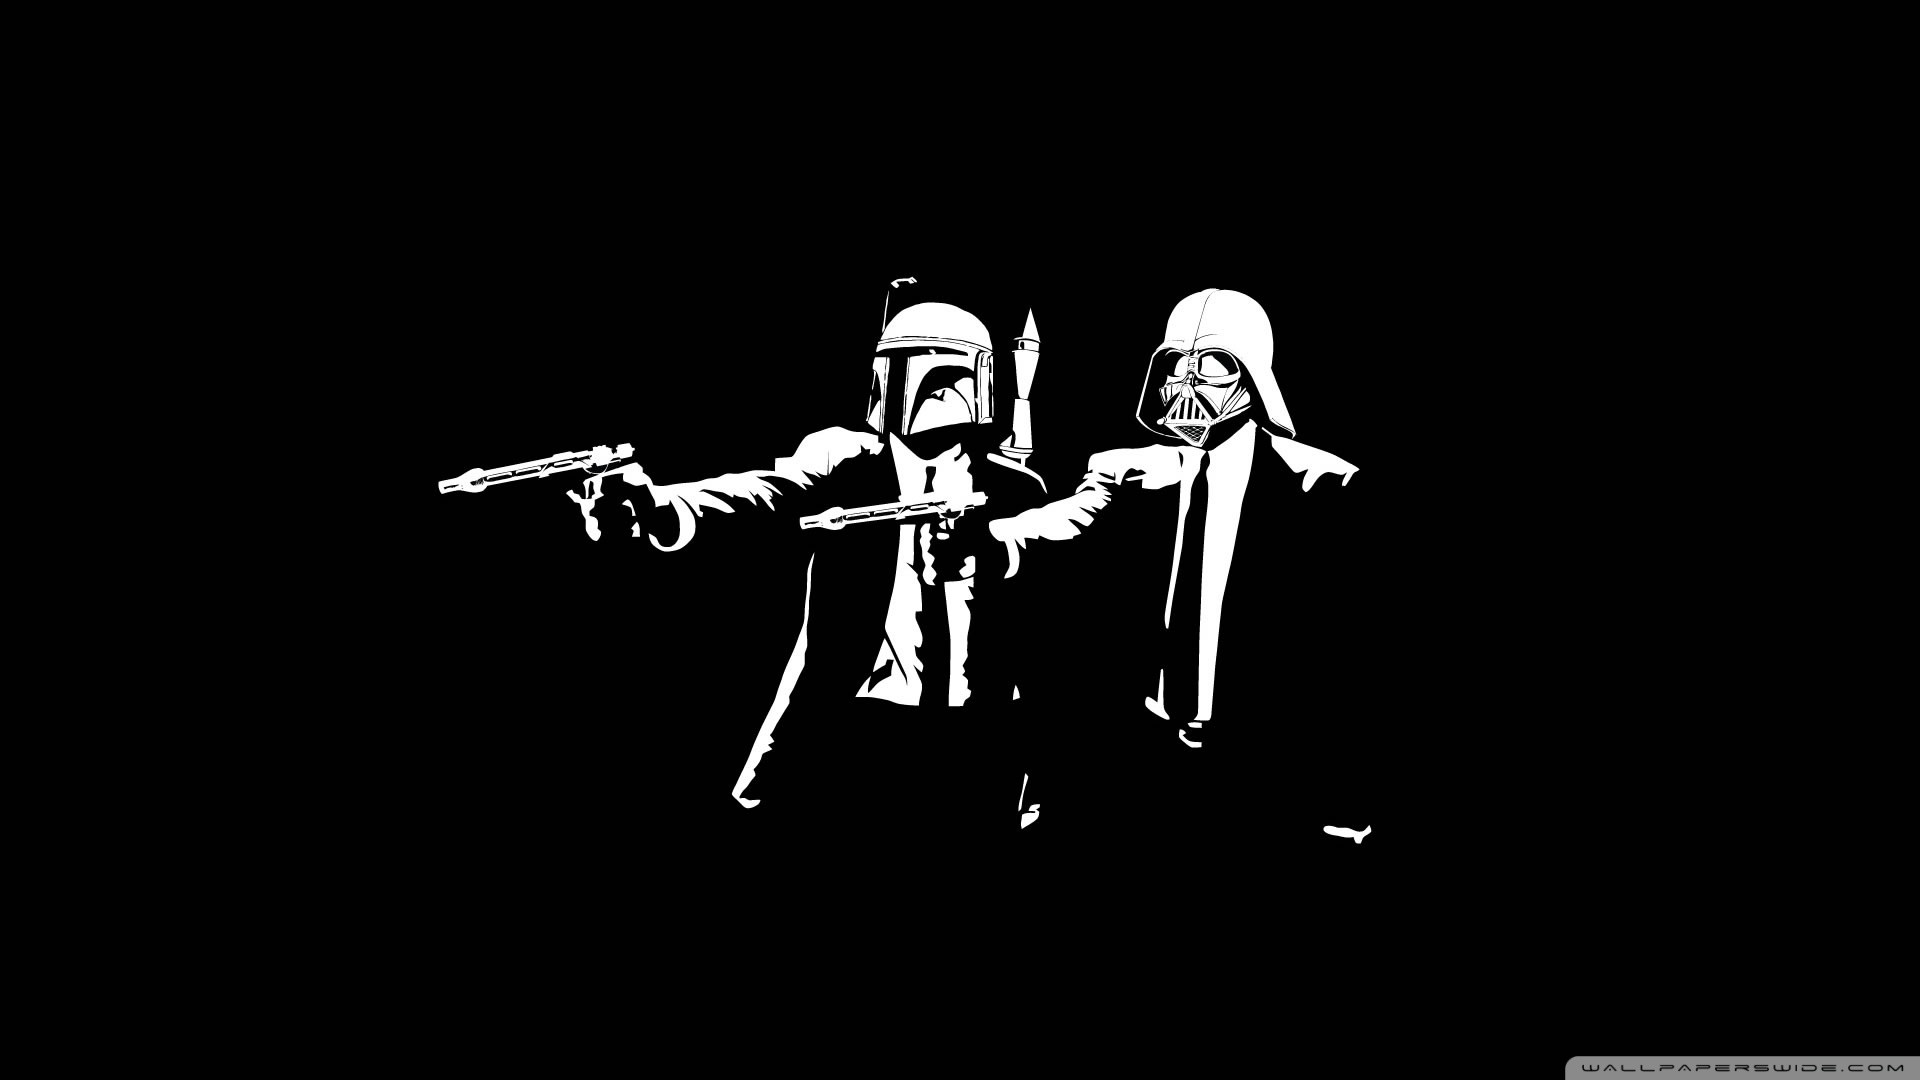 Star Wars Pulp Fiction Wallpaper Image